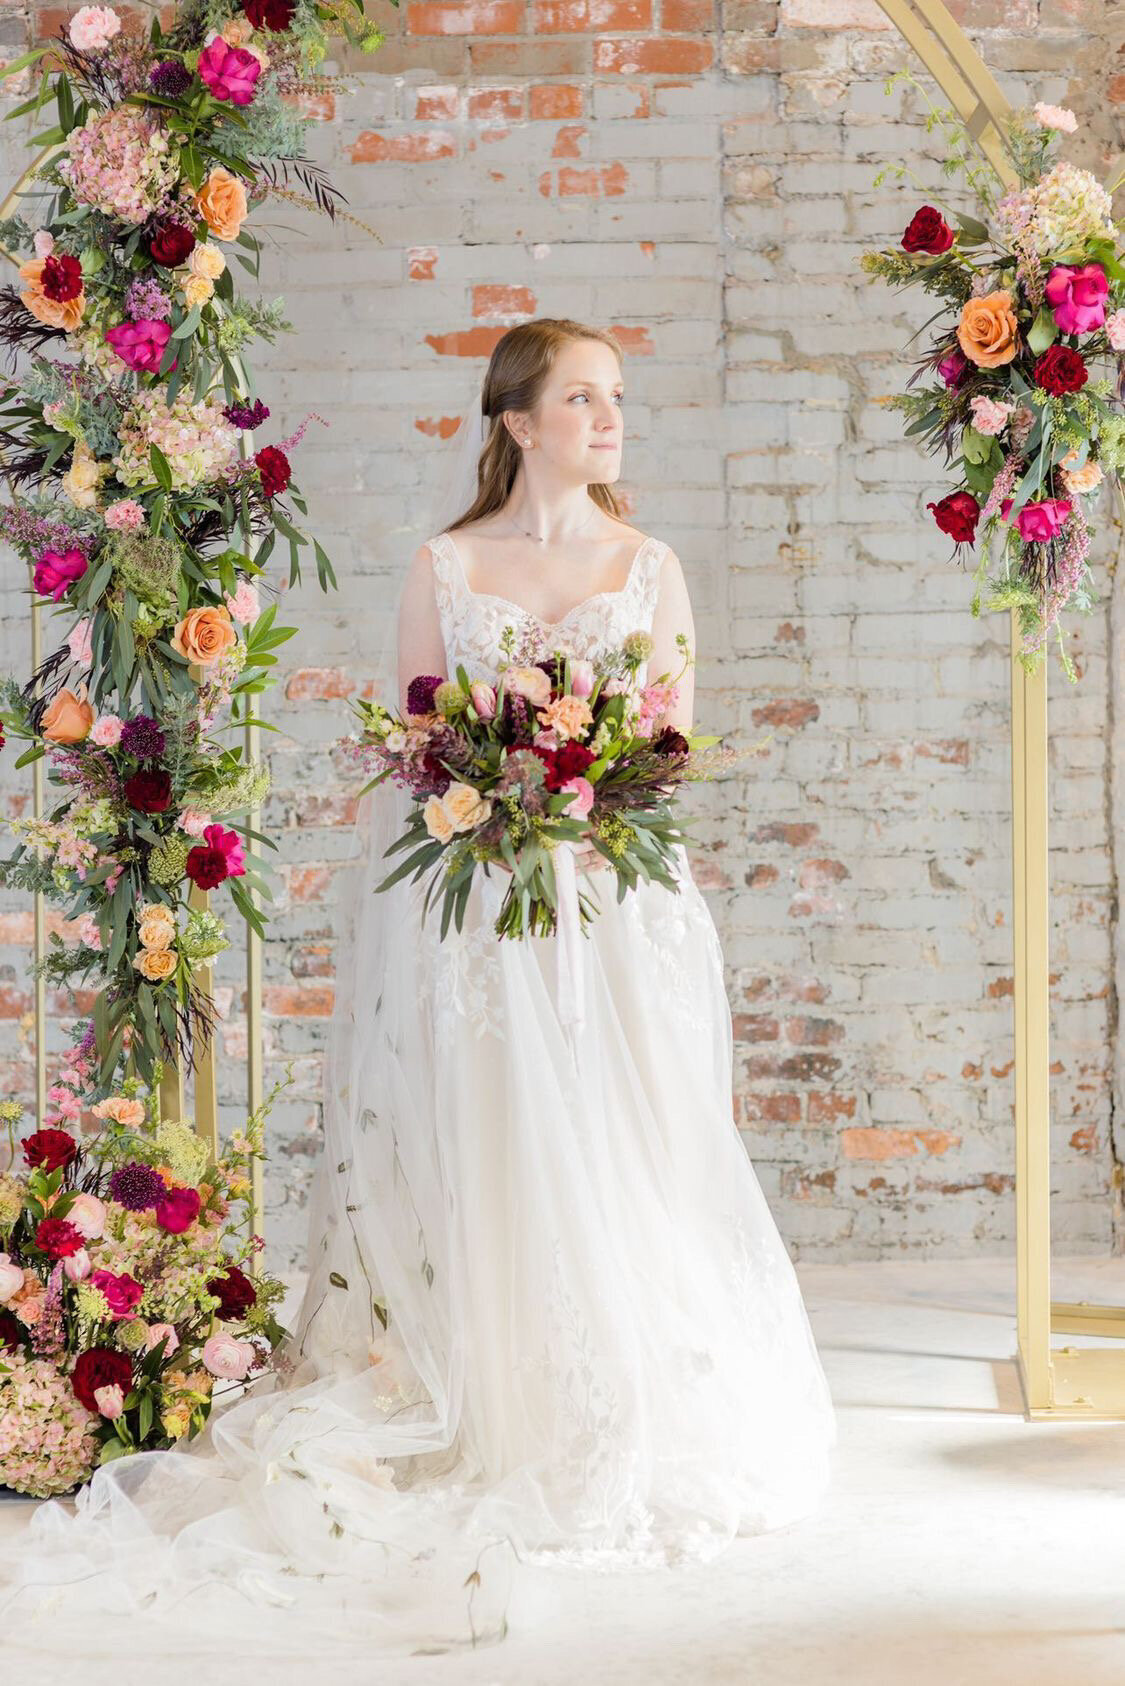 joyceannsflowershop-joyceanns-weddingflowers-Indiana-Illinois-Weddingbouquet